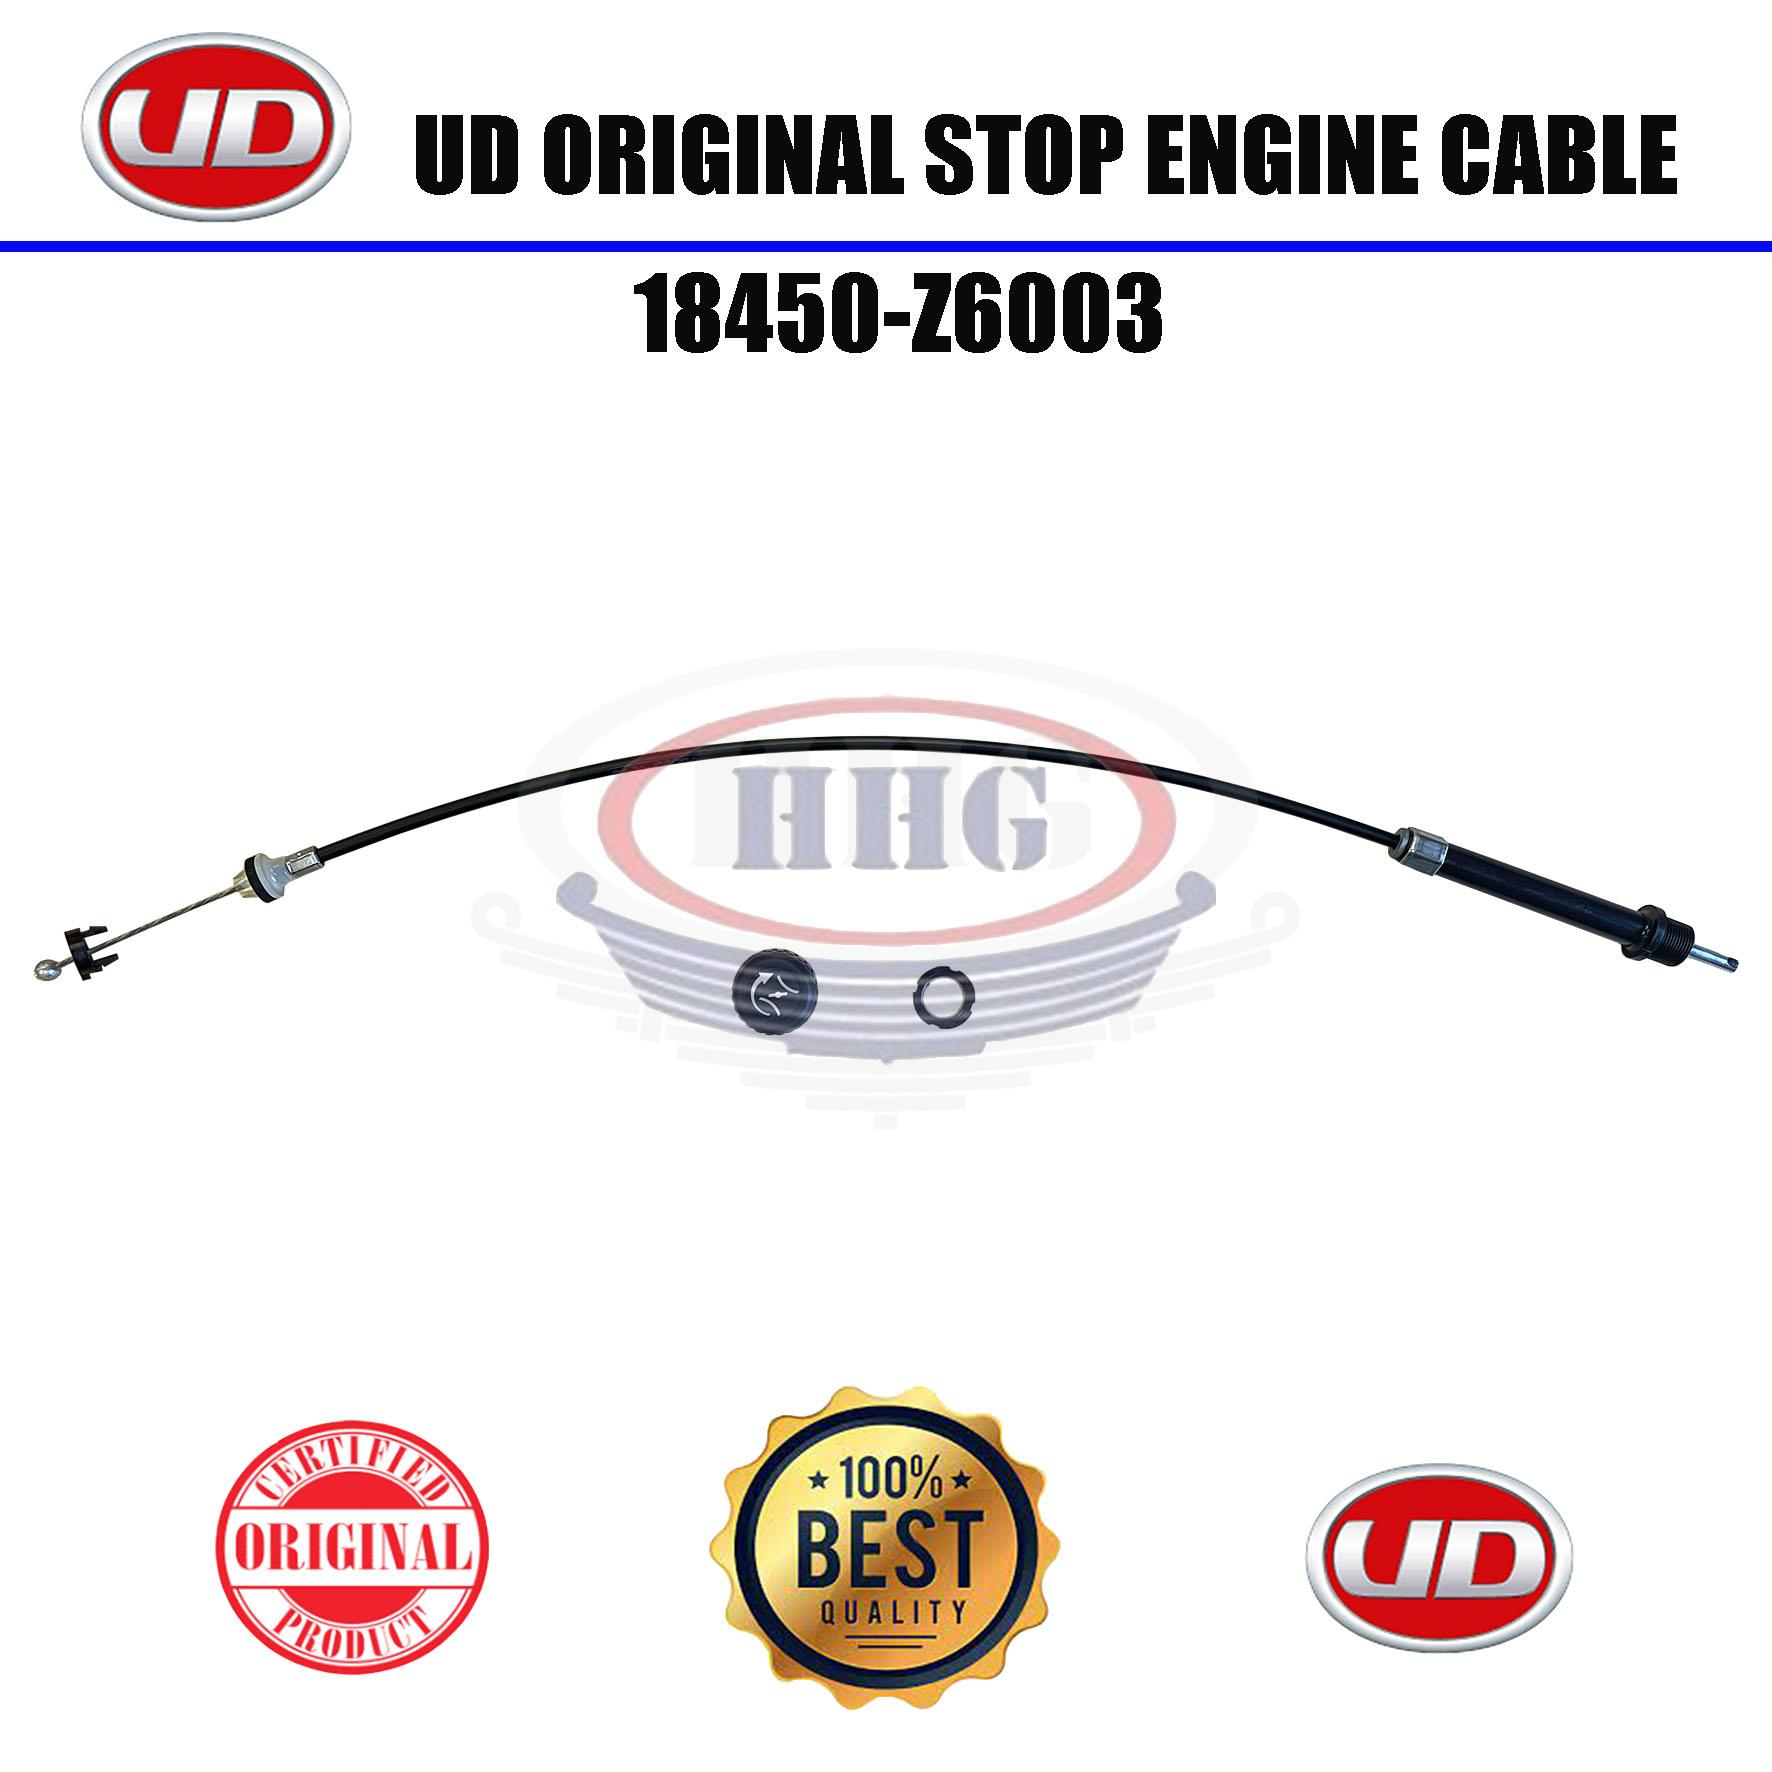 UD Original JA430 JA450 JP251 Stop Engine Cable (18450-Z6003)